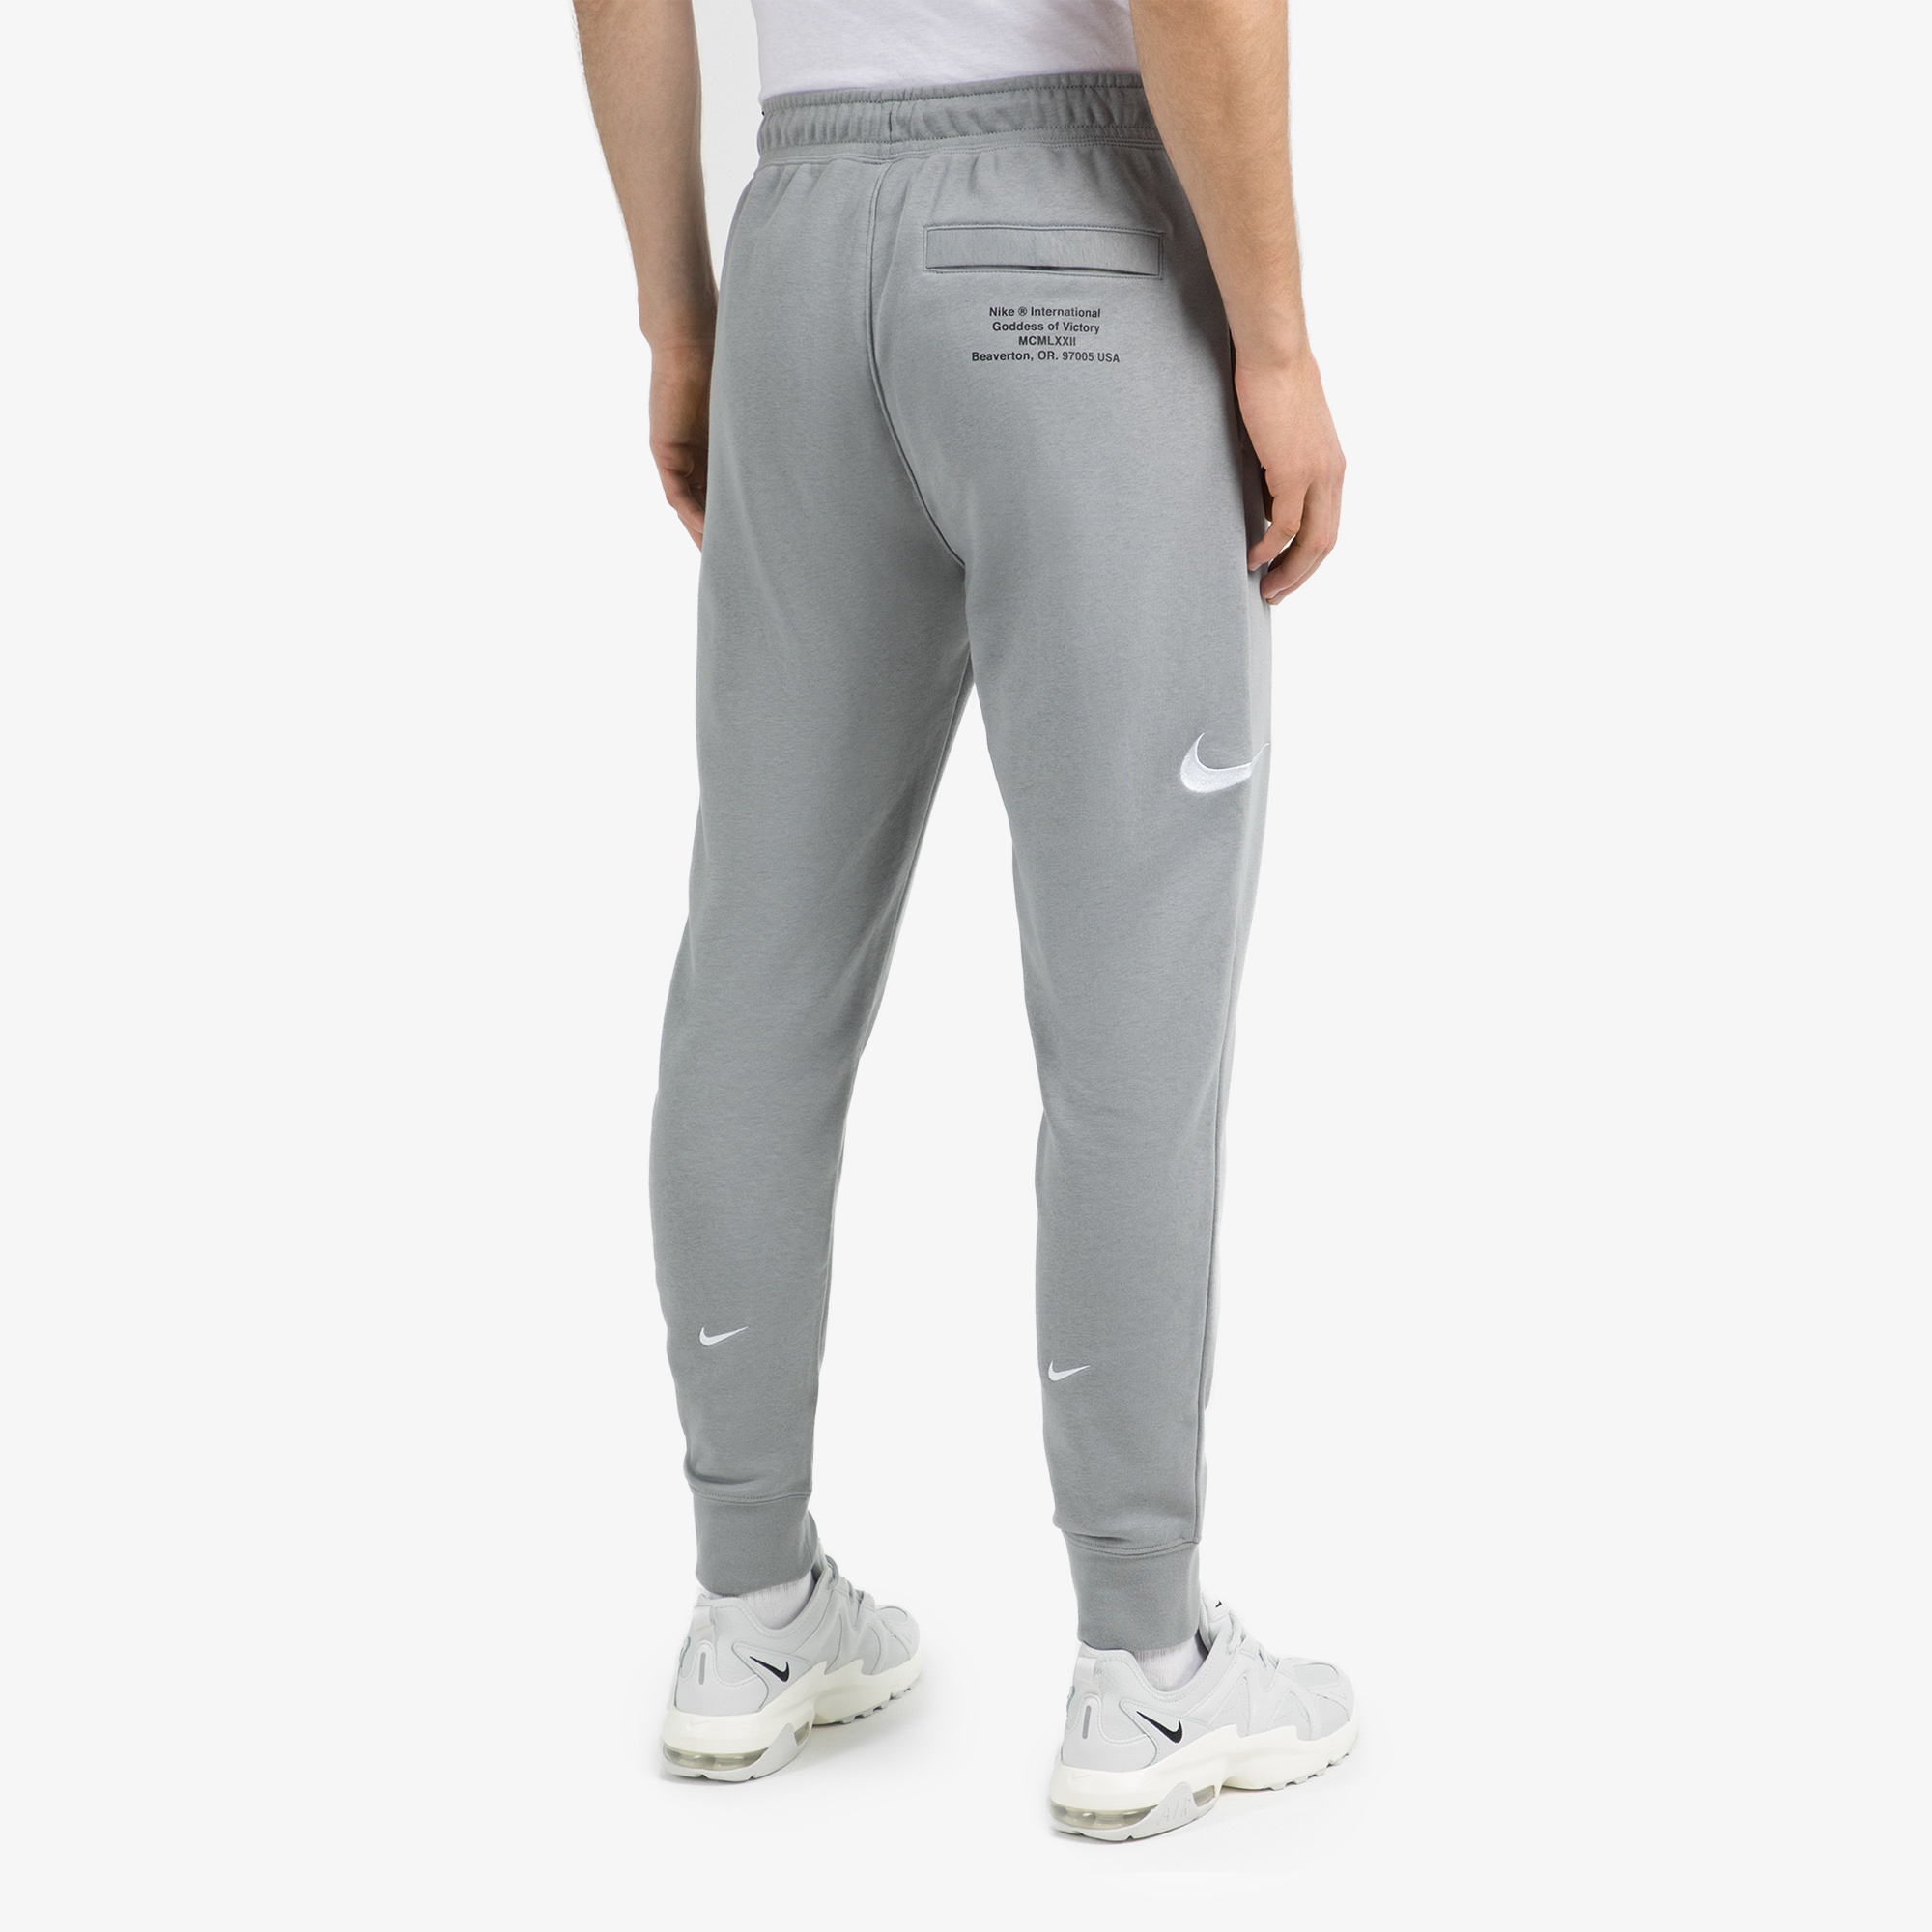 Брюки Nike Nike Sportswear Swoosh CJ4880N06-073, цвет серый, размер 44-46 CJ4880-073 - фото 2